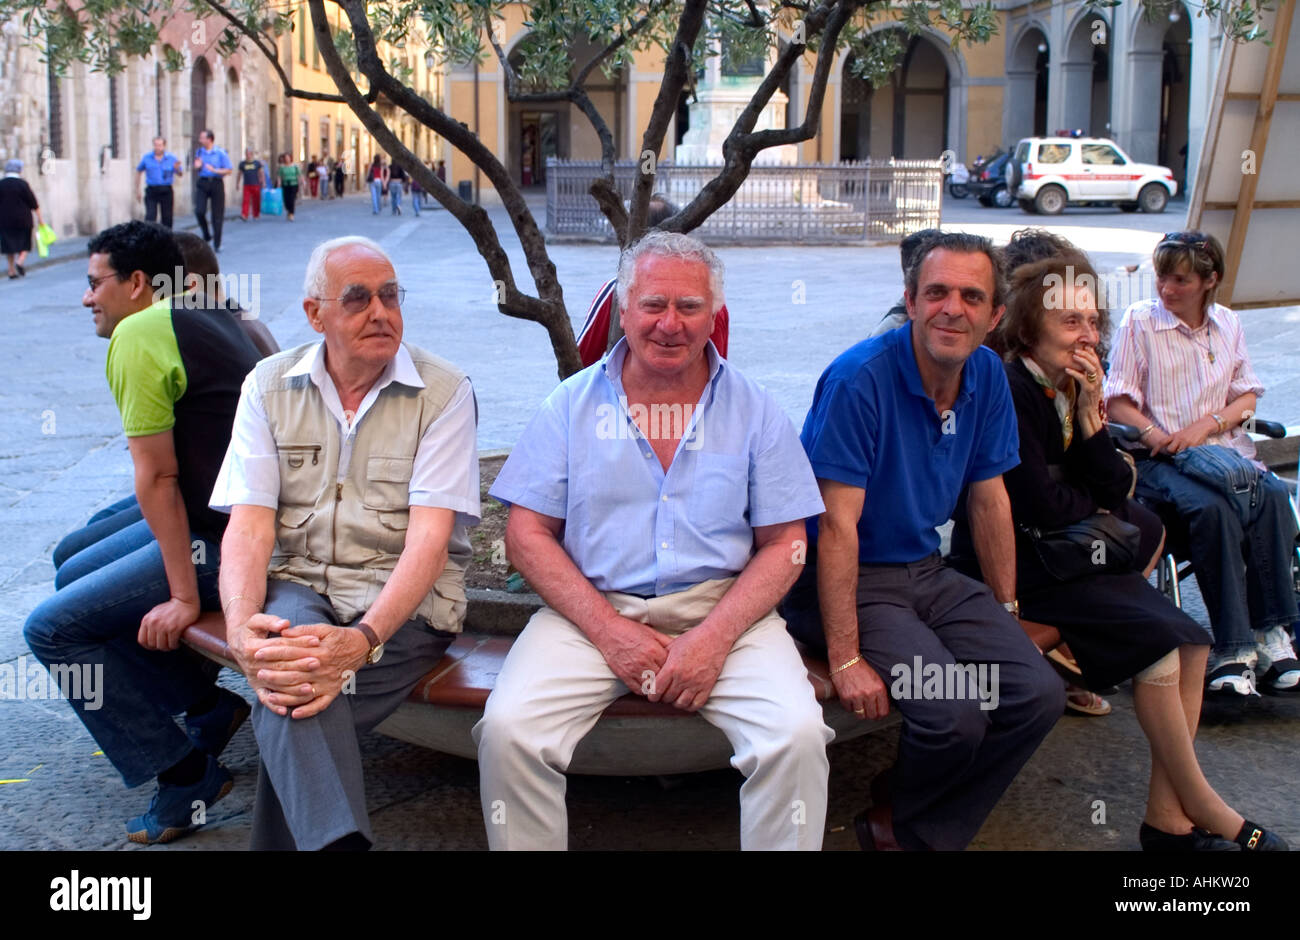 prato-tuscany-italy-italian-men-old-man-square-AHKW20.jpg